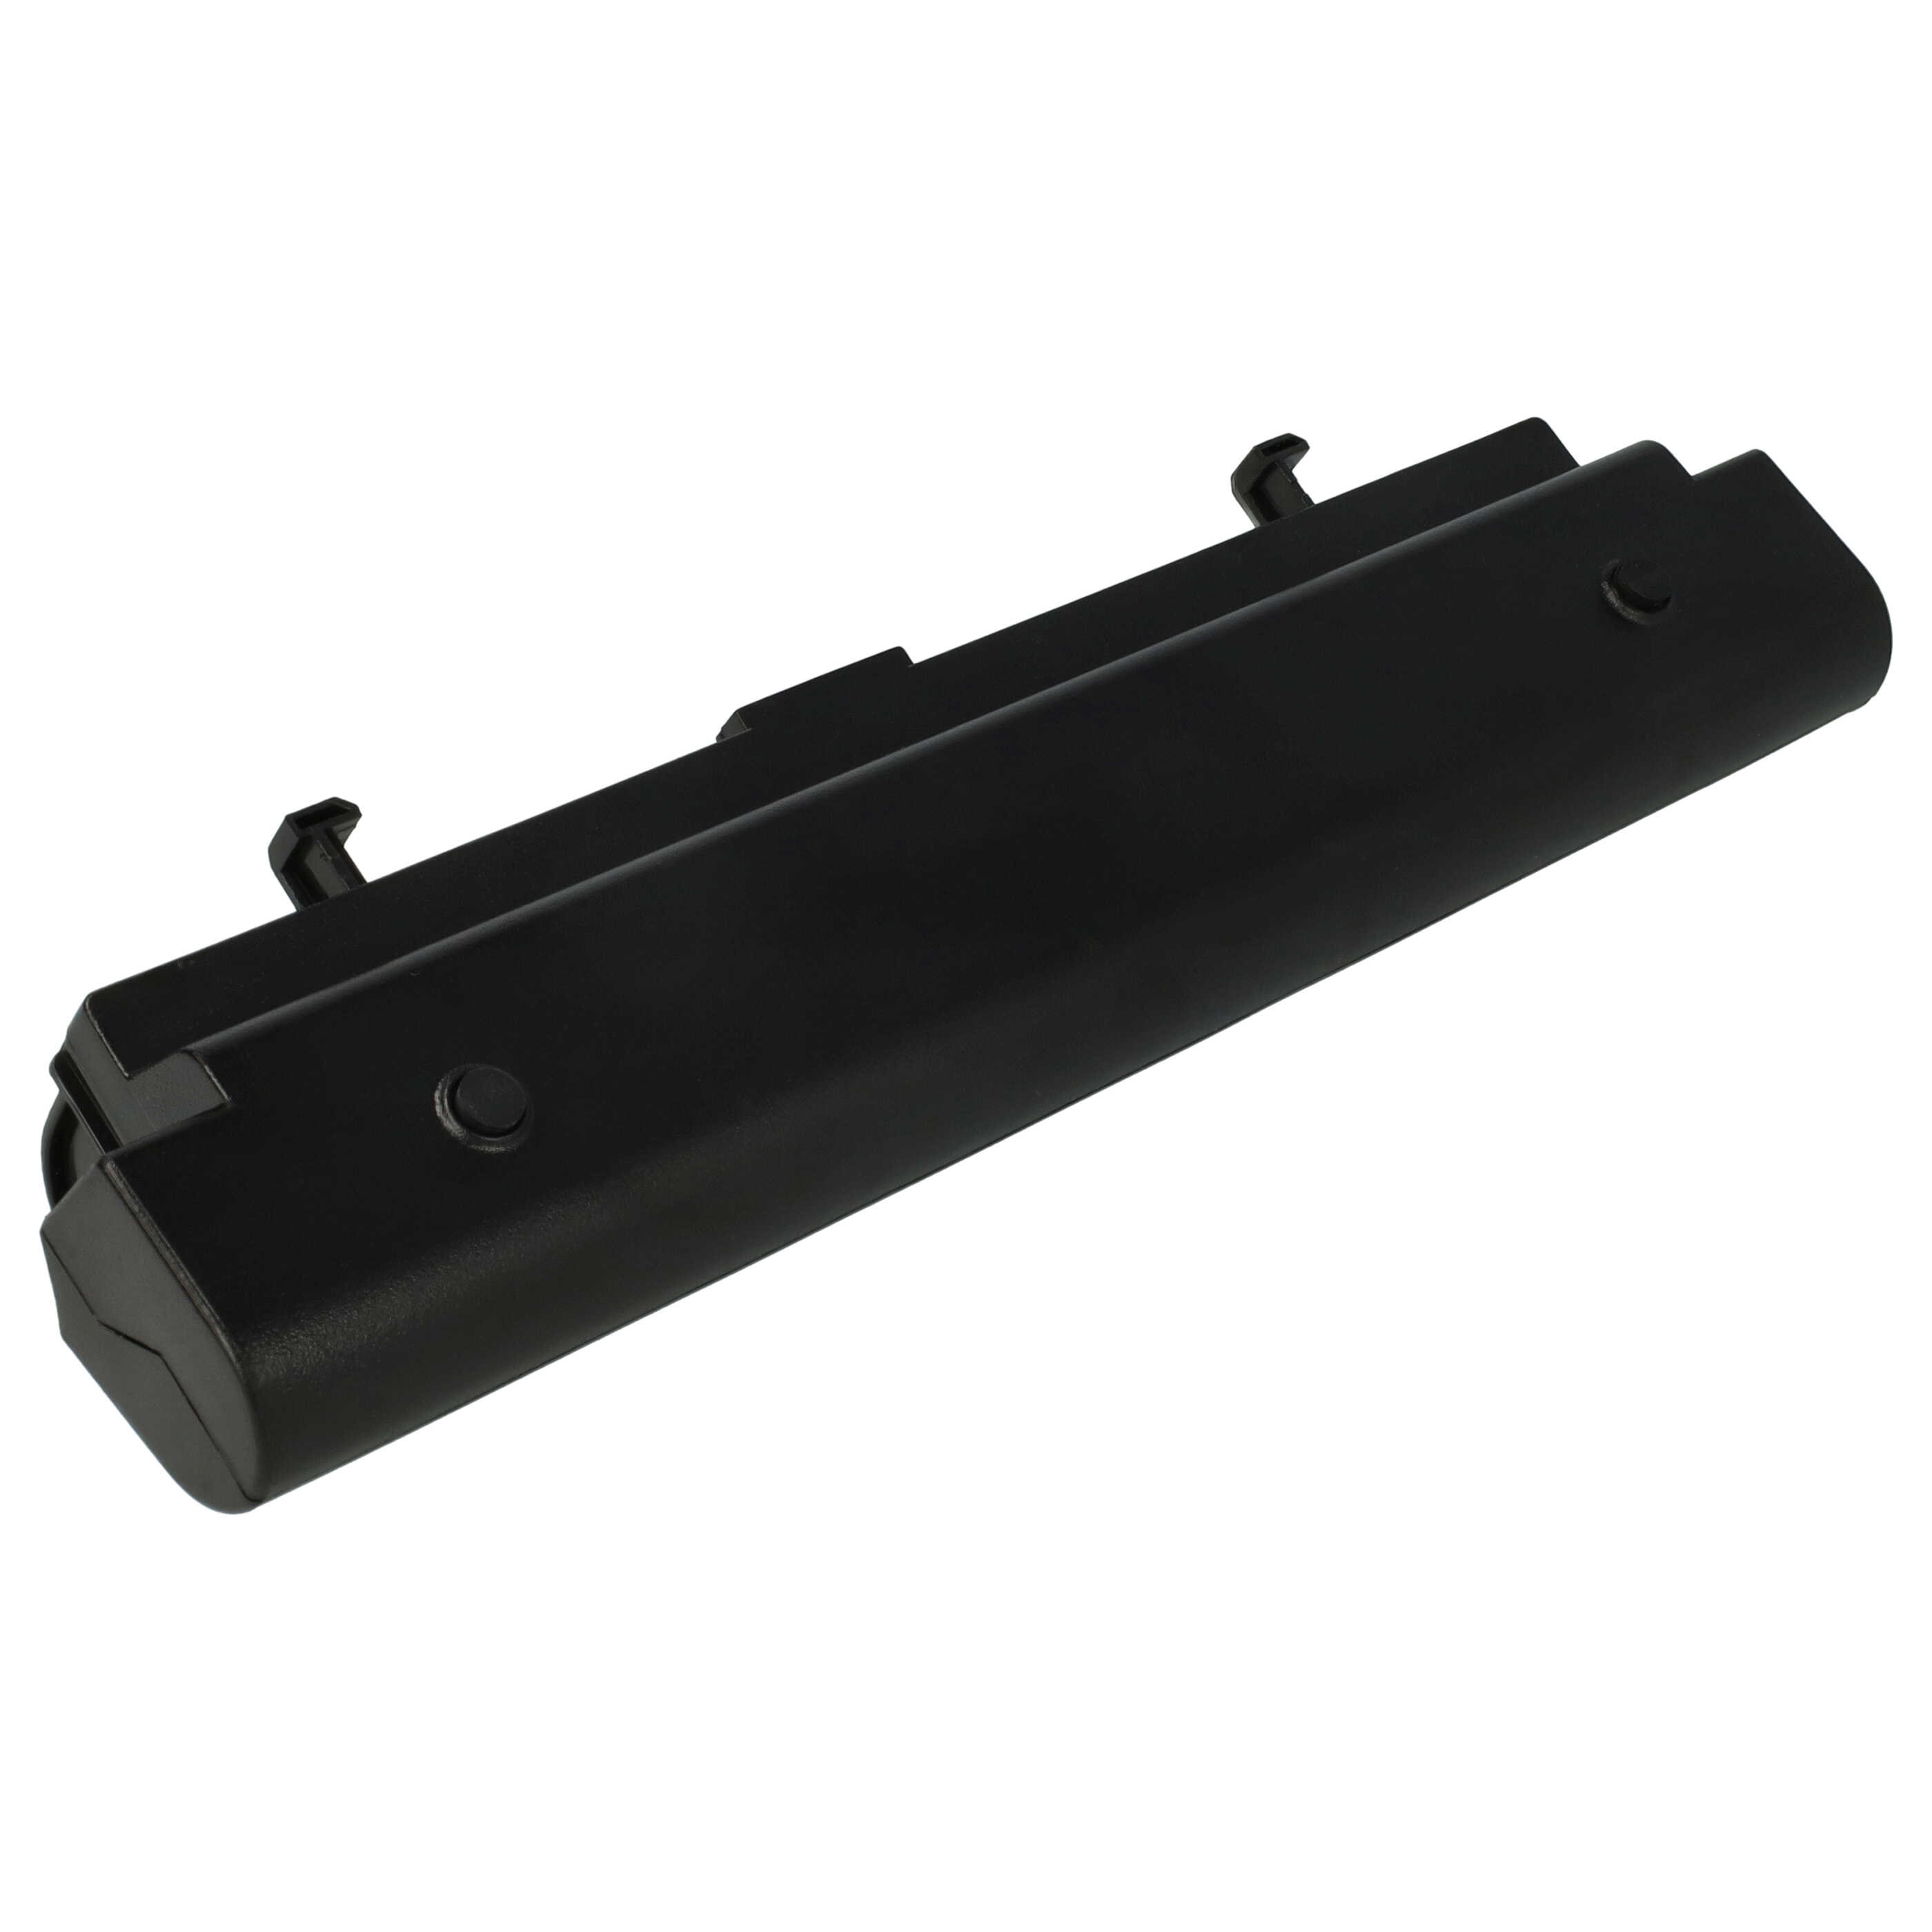 Notebook Battery Replacement for Lenovo L08C3B21 - 6600mAh 11.1V Li-Ion, black